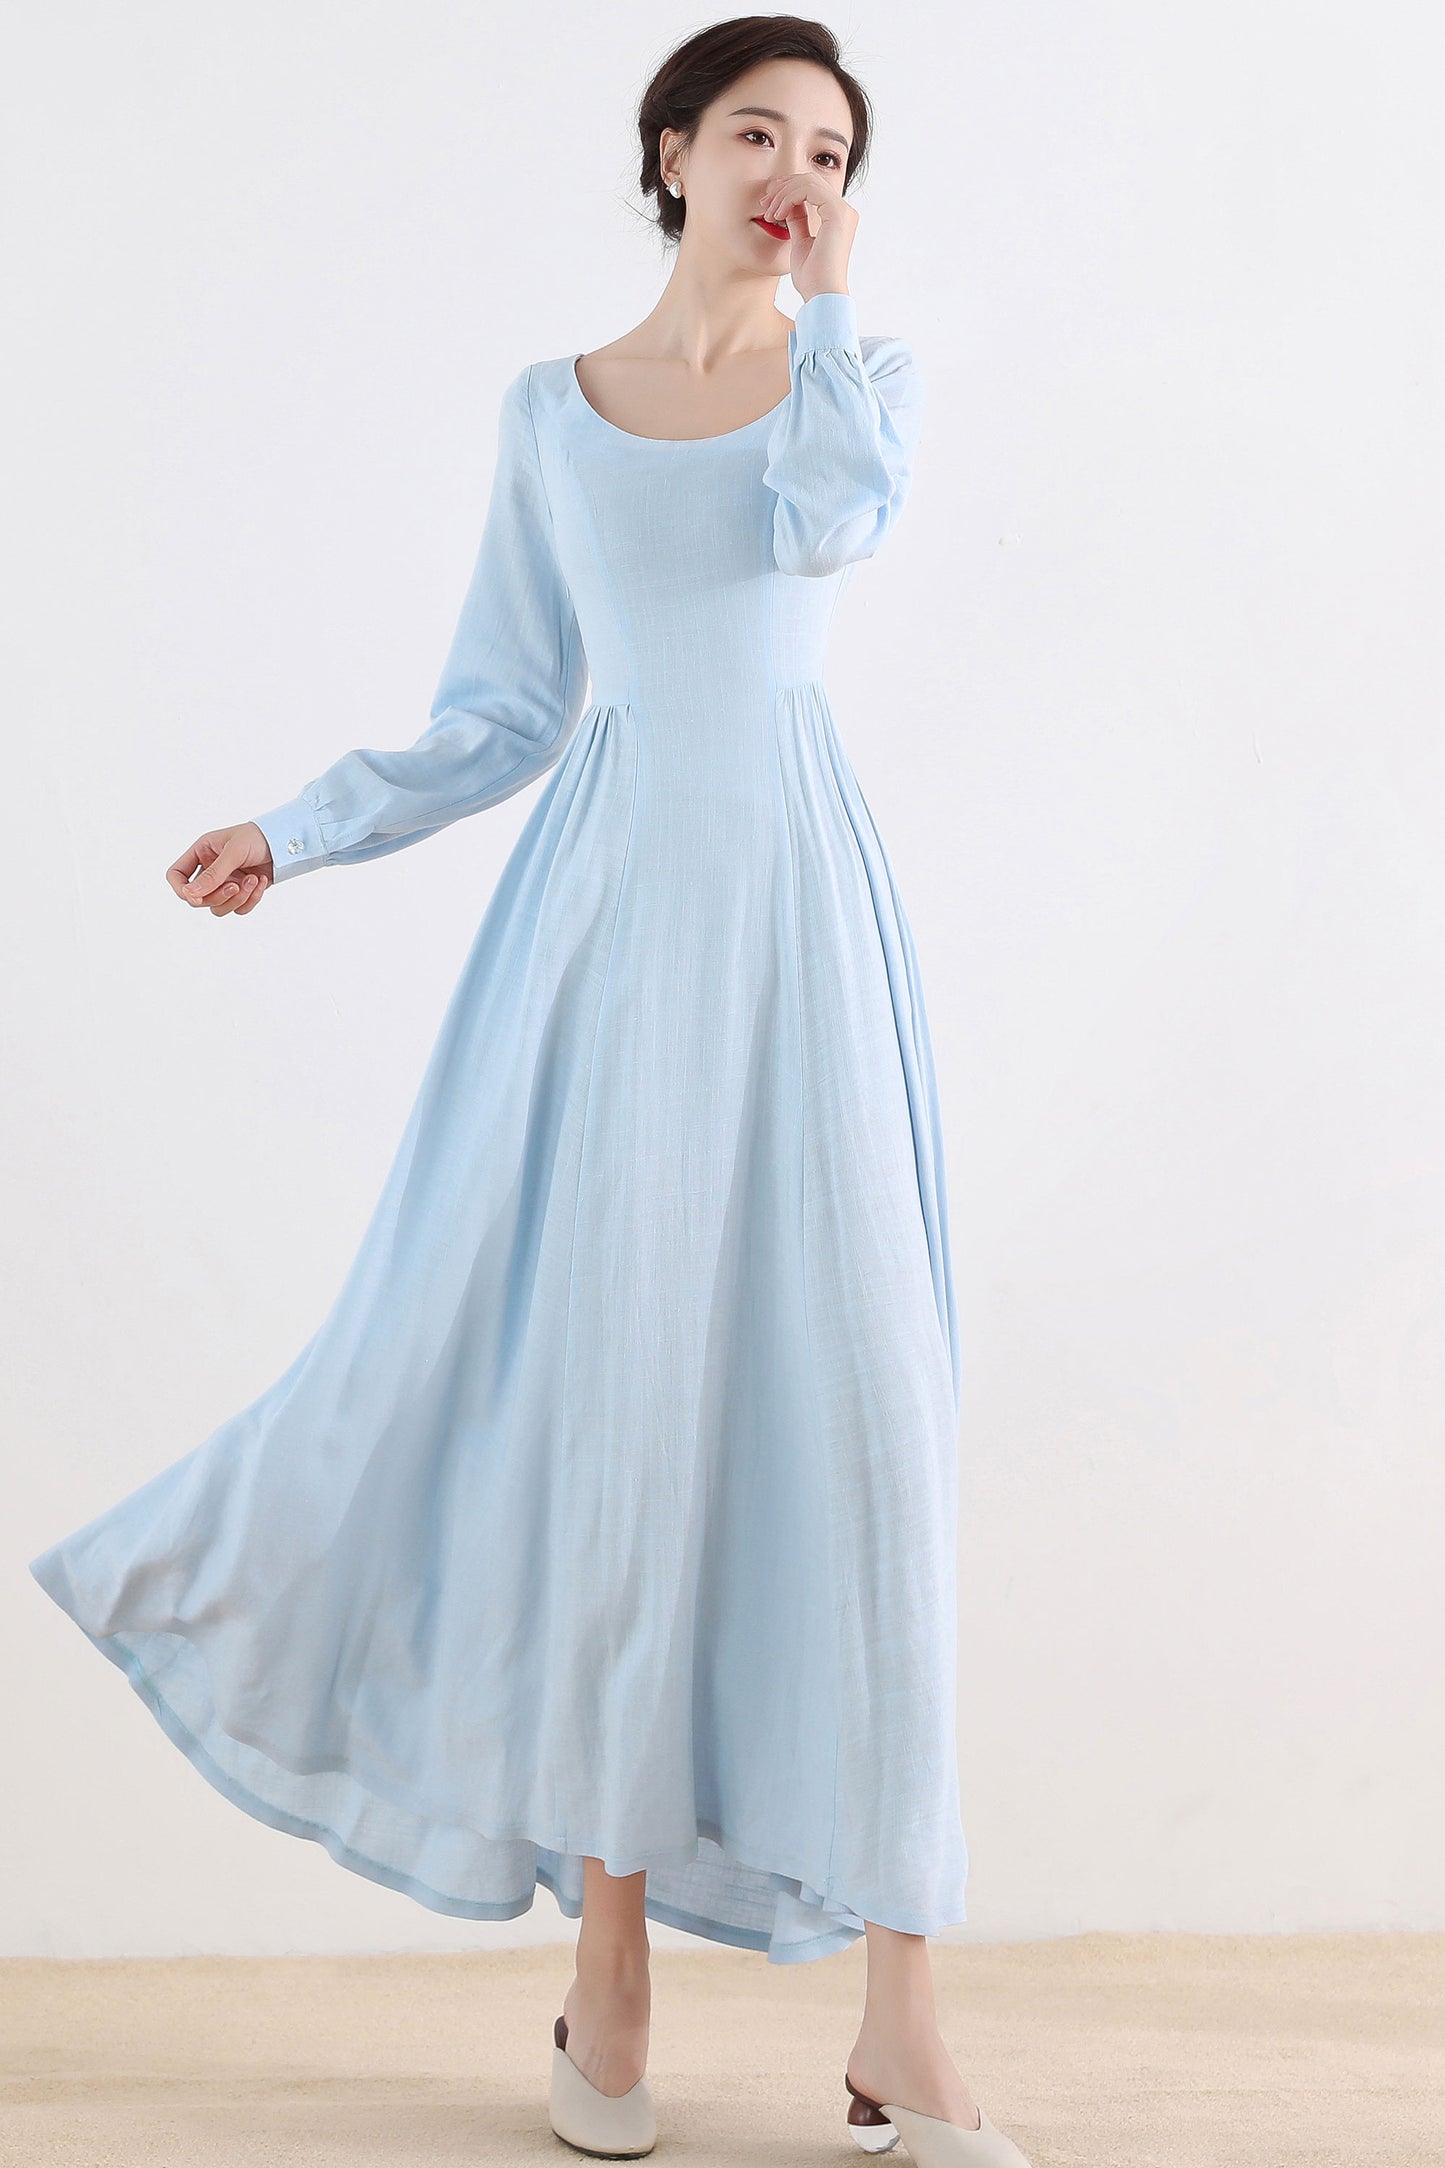 Blue long sleeve bridesmaid dress 2508